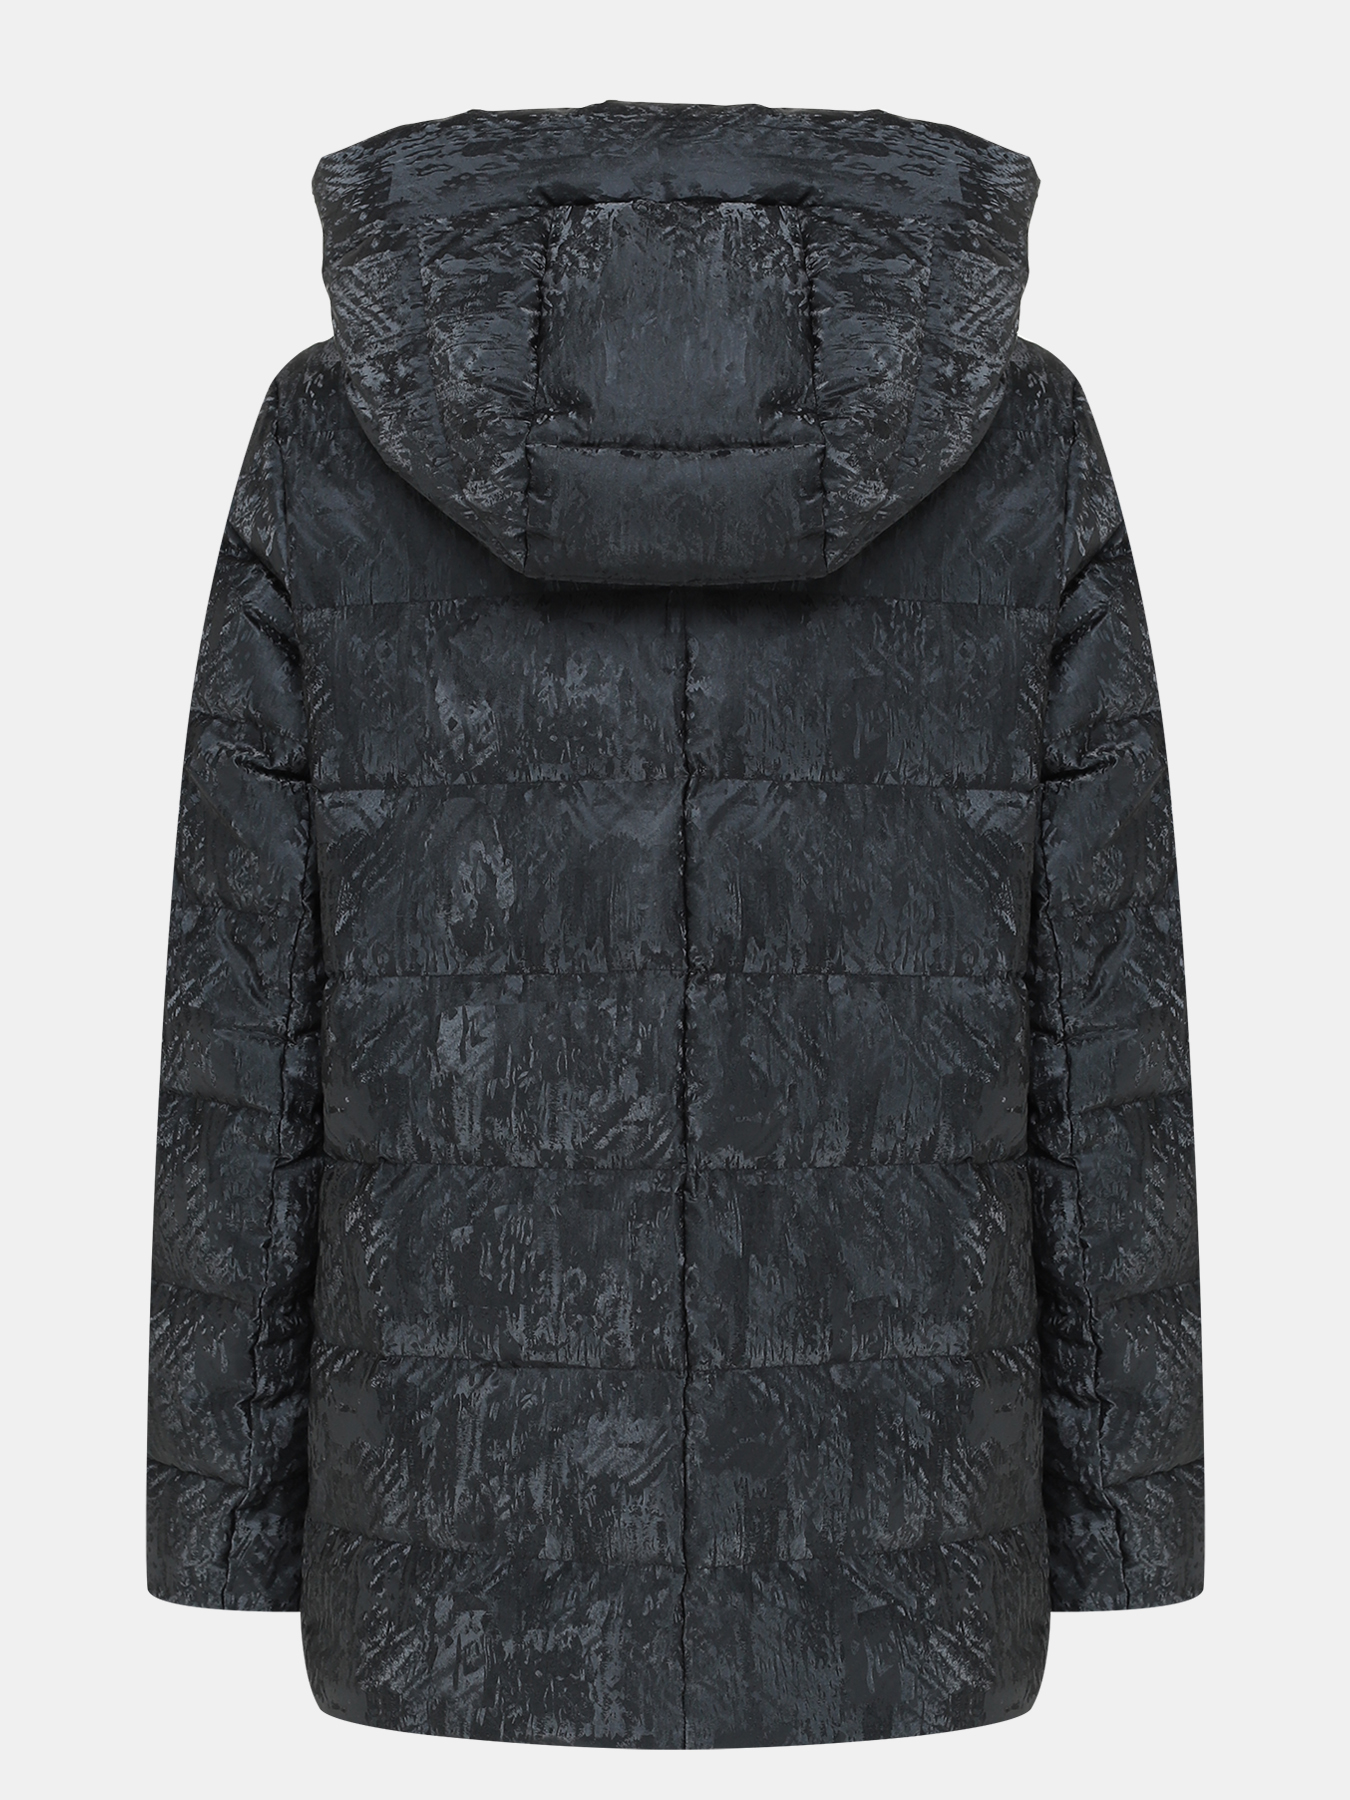 Куртка ORSA Couture 383919-022, цвет мультиколор, размер 44 - фото 2